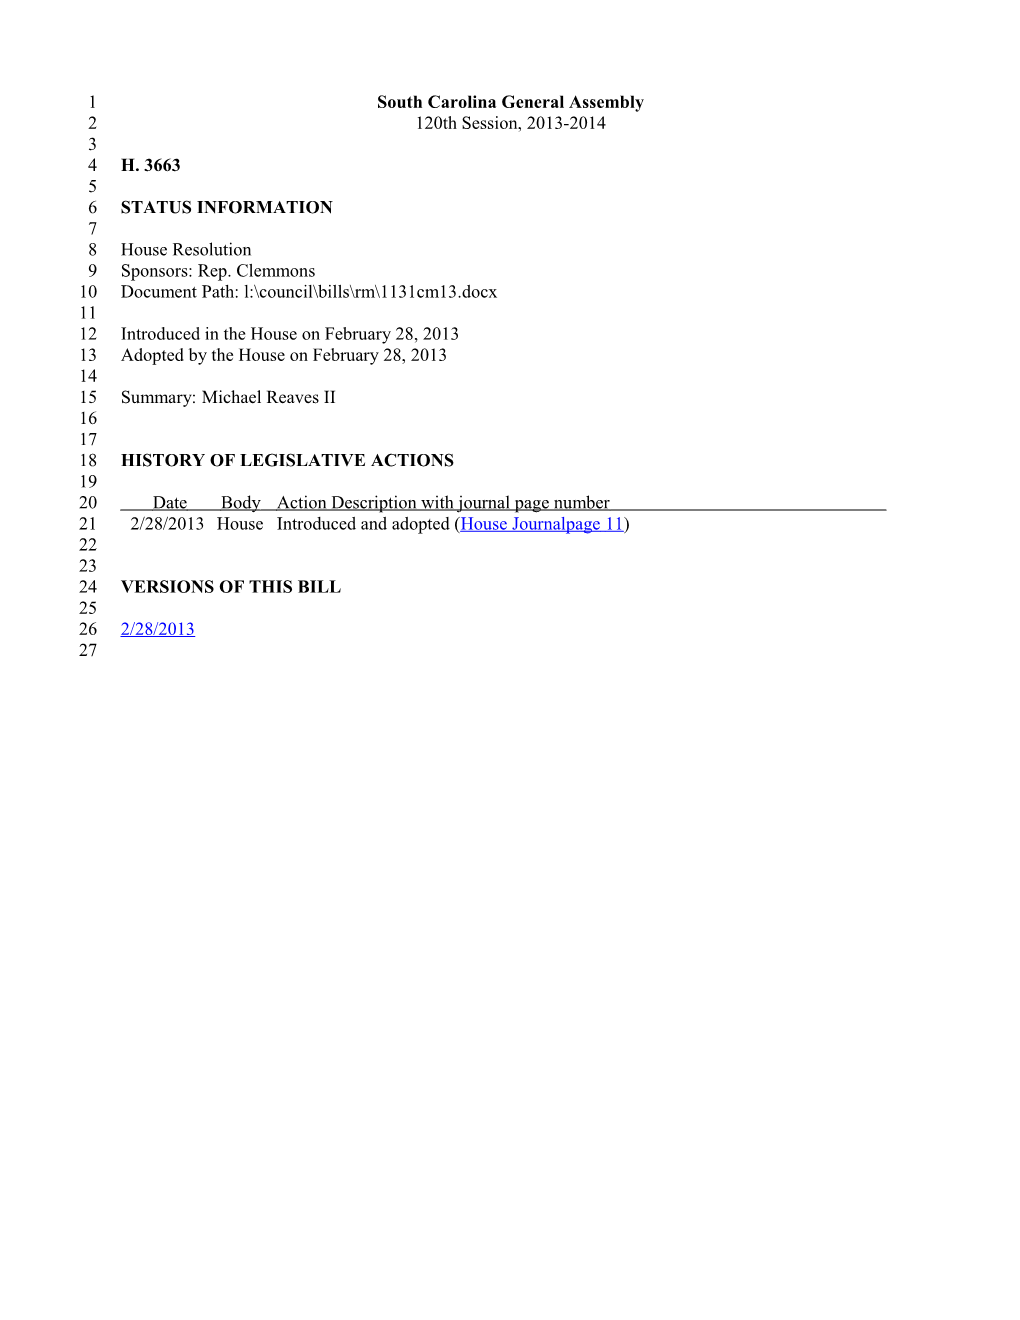 2013-2014 Bill 3663: Michael Reaves II - South Carolina Legislature Online